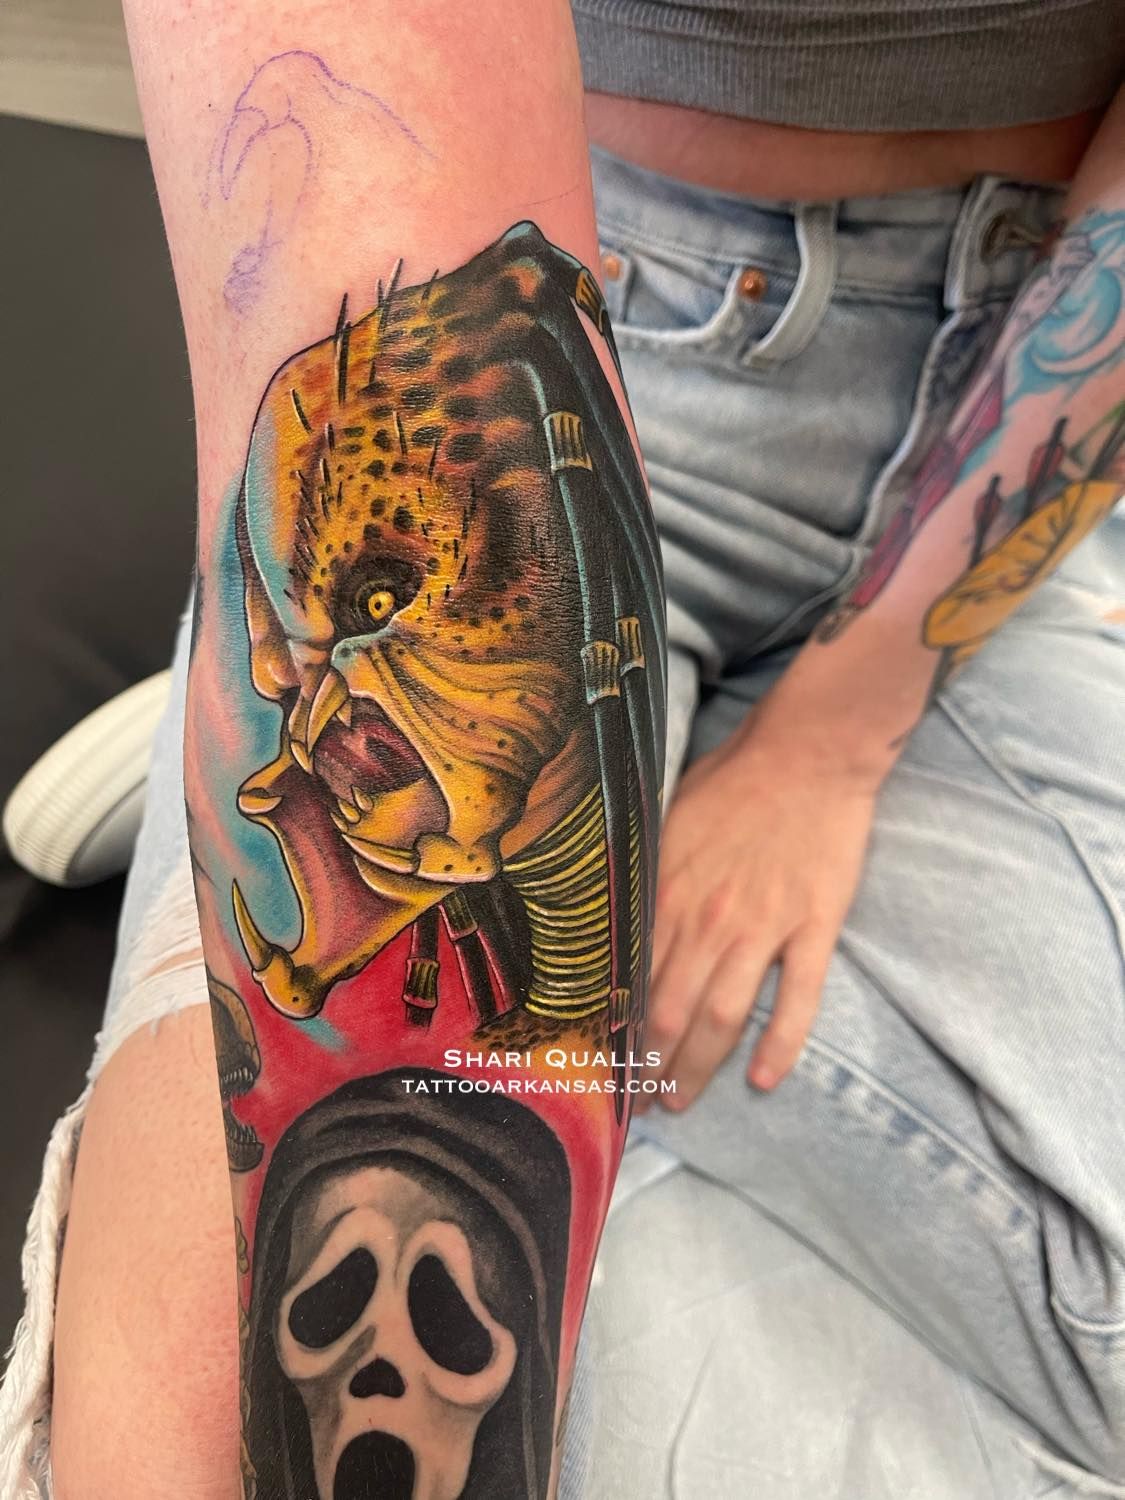 Ry Tattoomiester on Instagram tattoomiestertattoos worldfamousink  killersandkingsproducts predator realismtattoo tattoo tattoos ink  inked  repost of predator